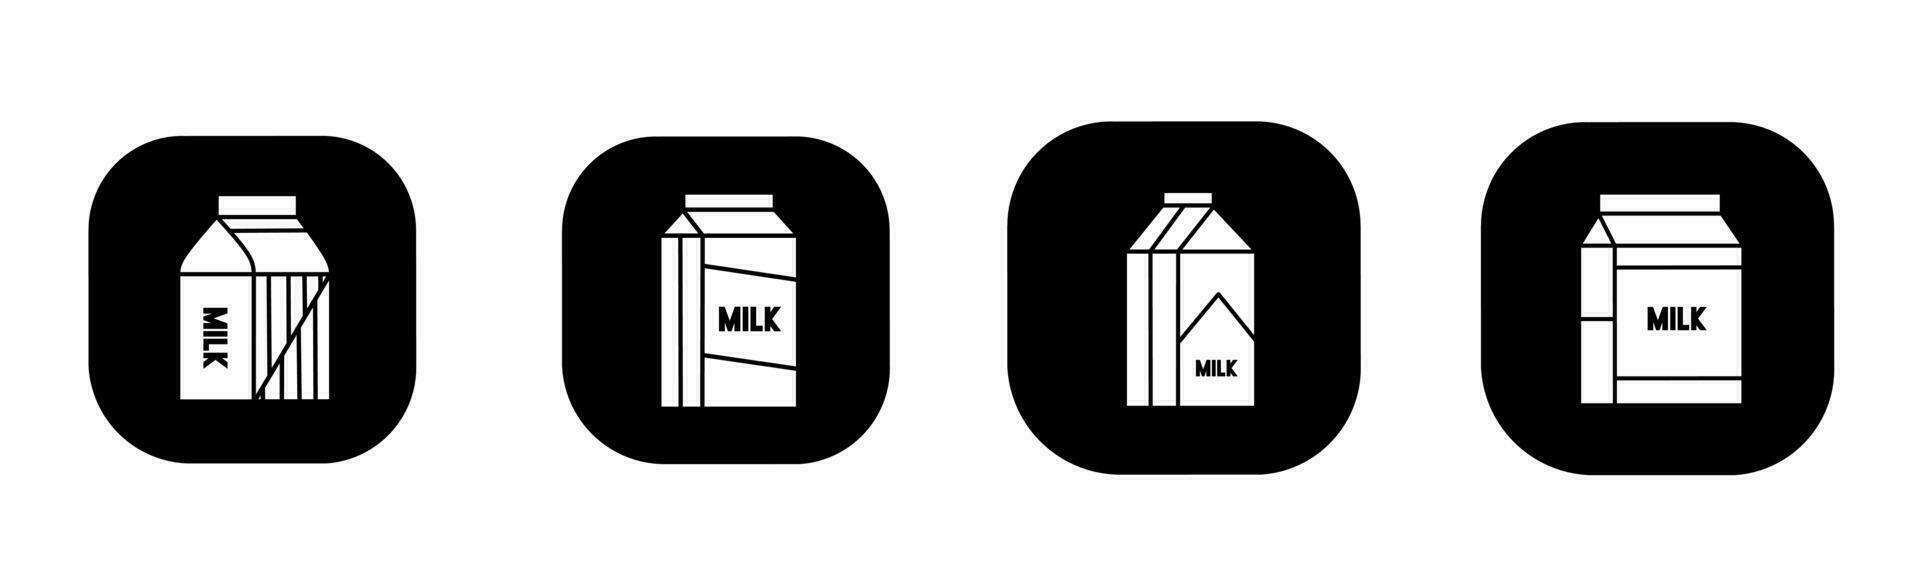 Milk icon in flat. A milk icon design. Stock vector. vector